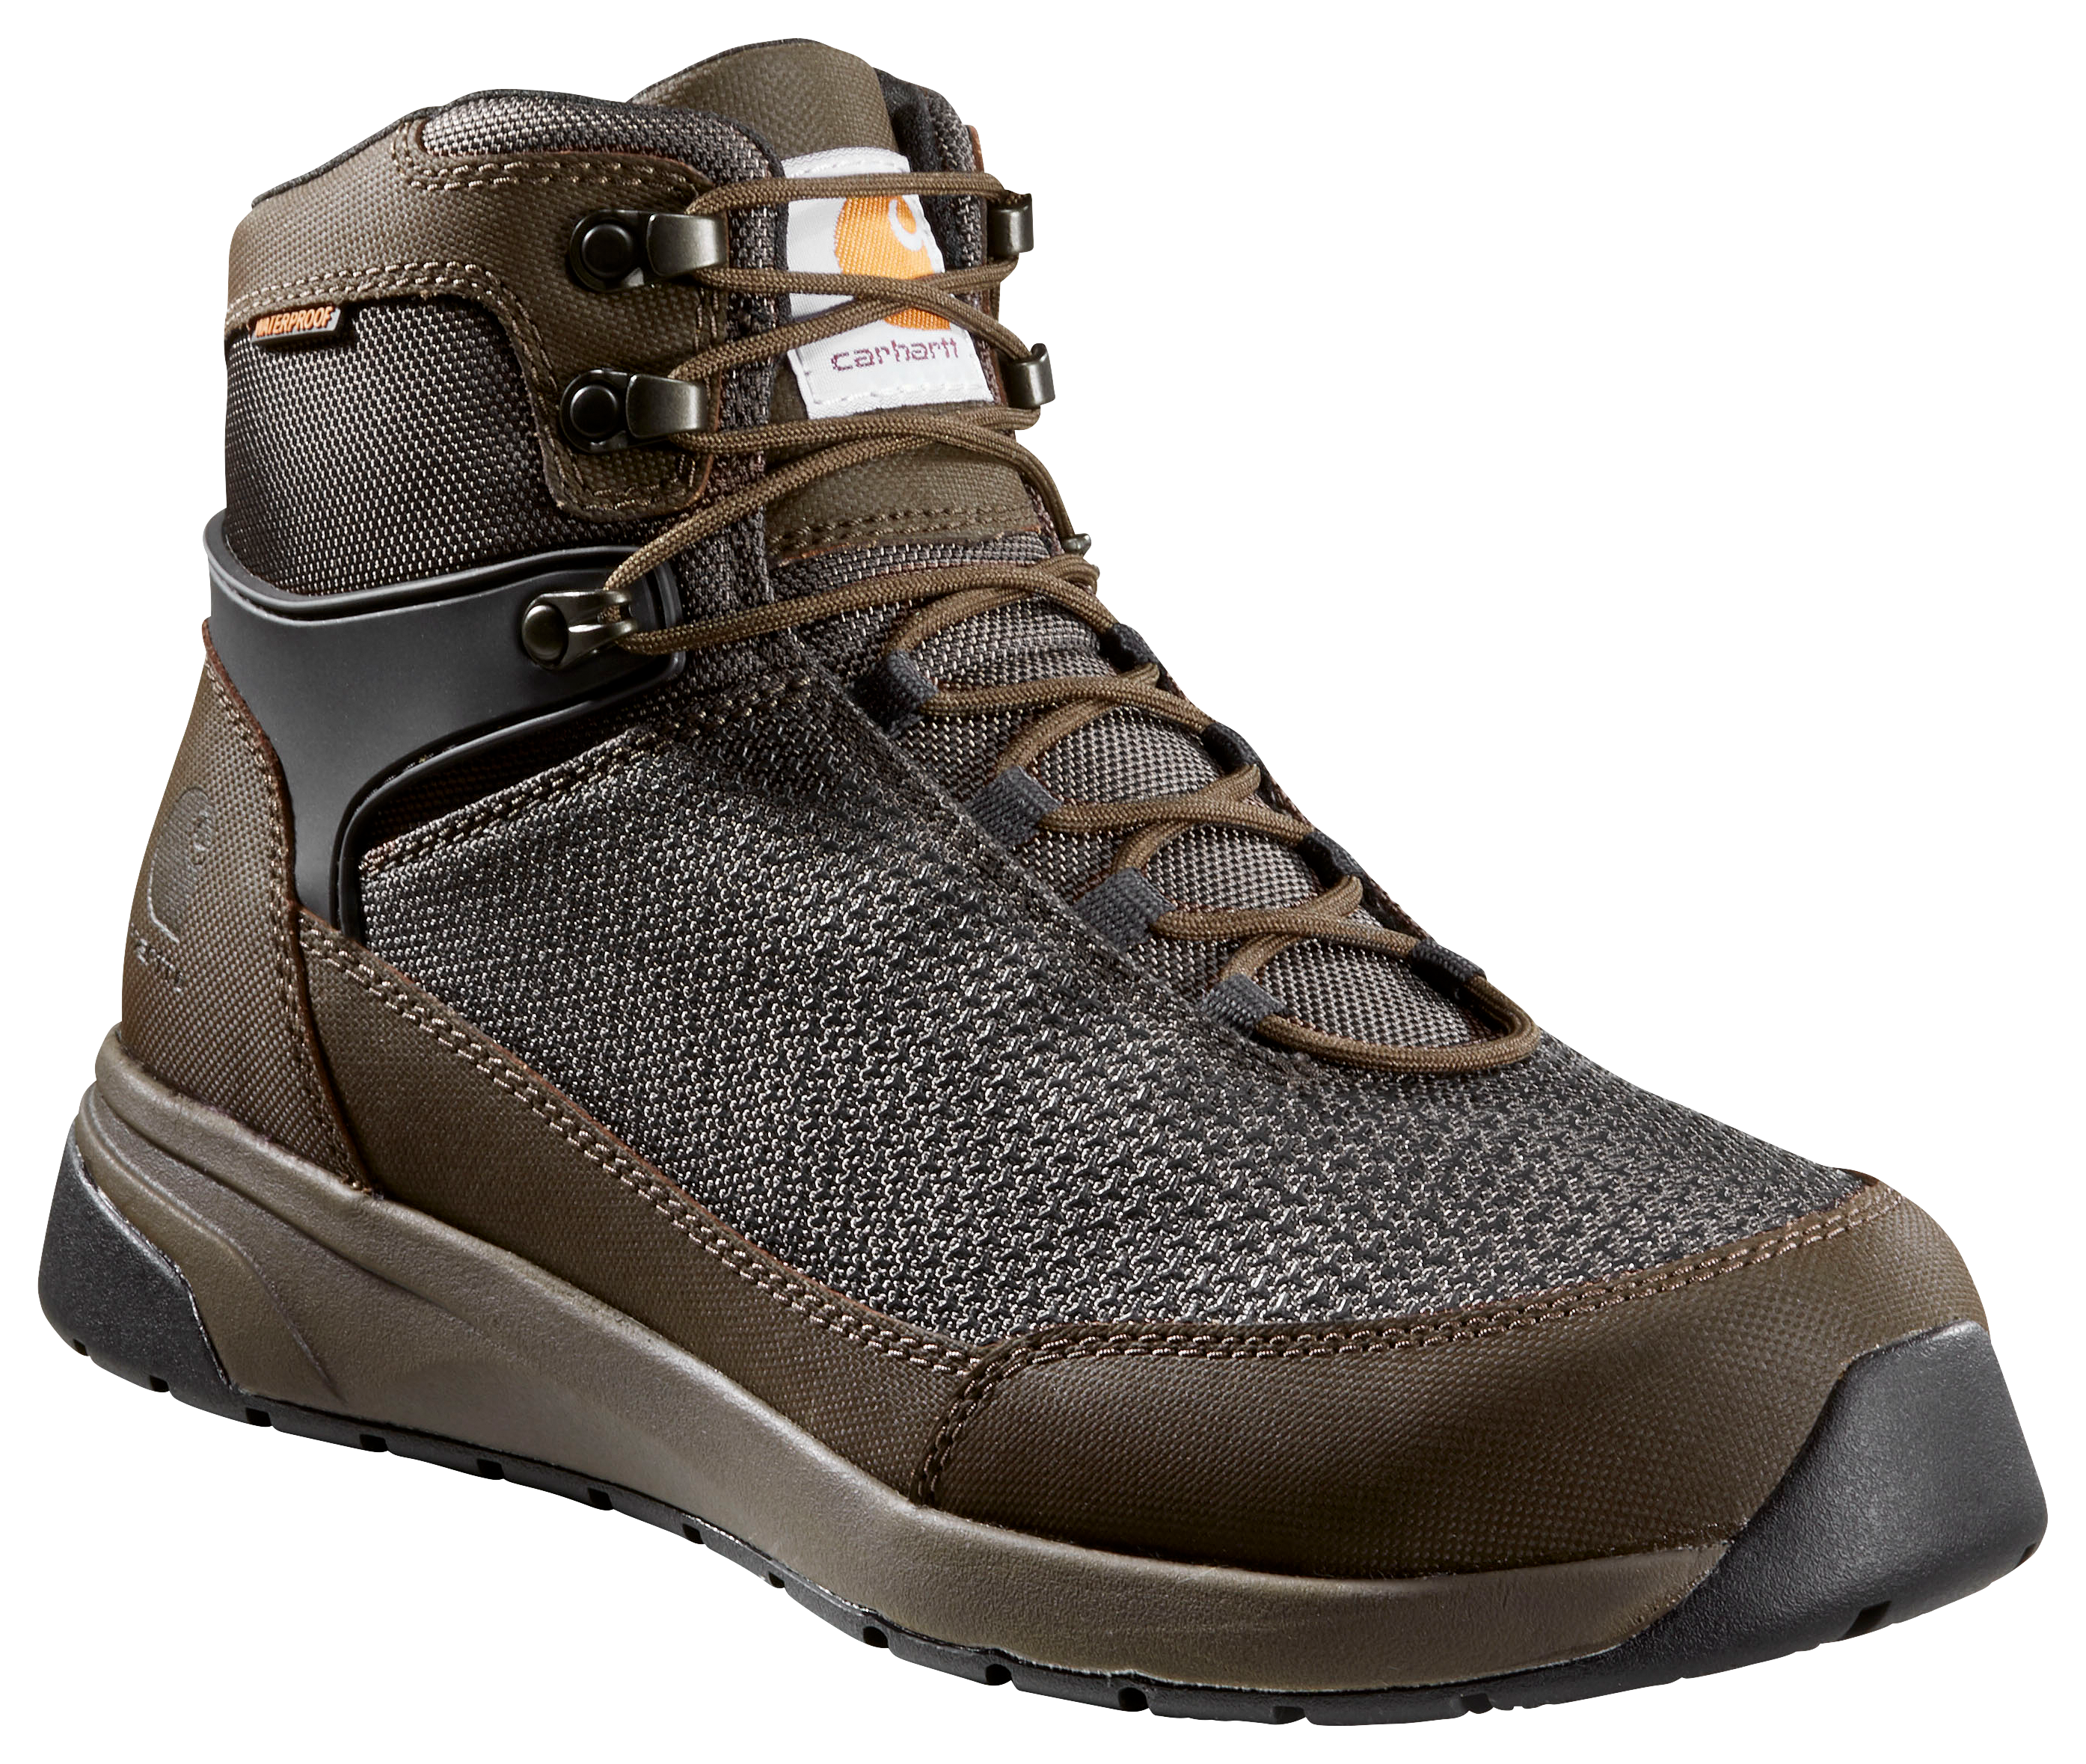 Carhartt Force 6"" Nano Composite-Toe Work Boots for Men - Espresso - 9W